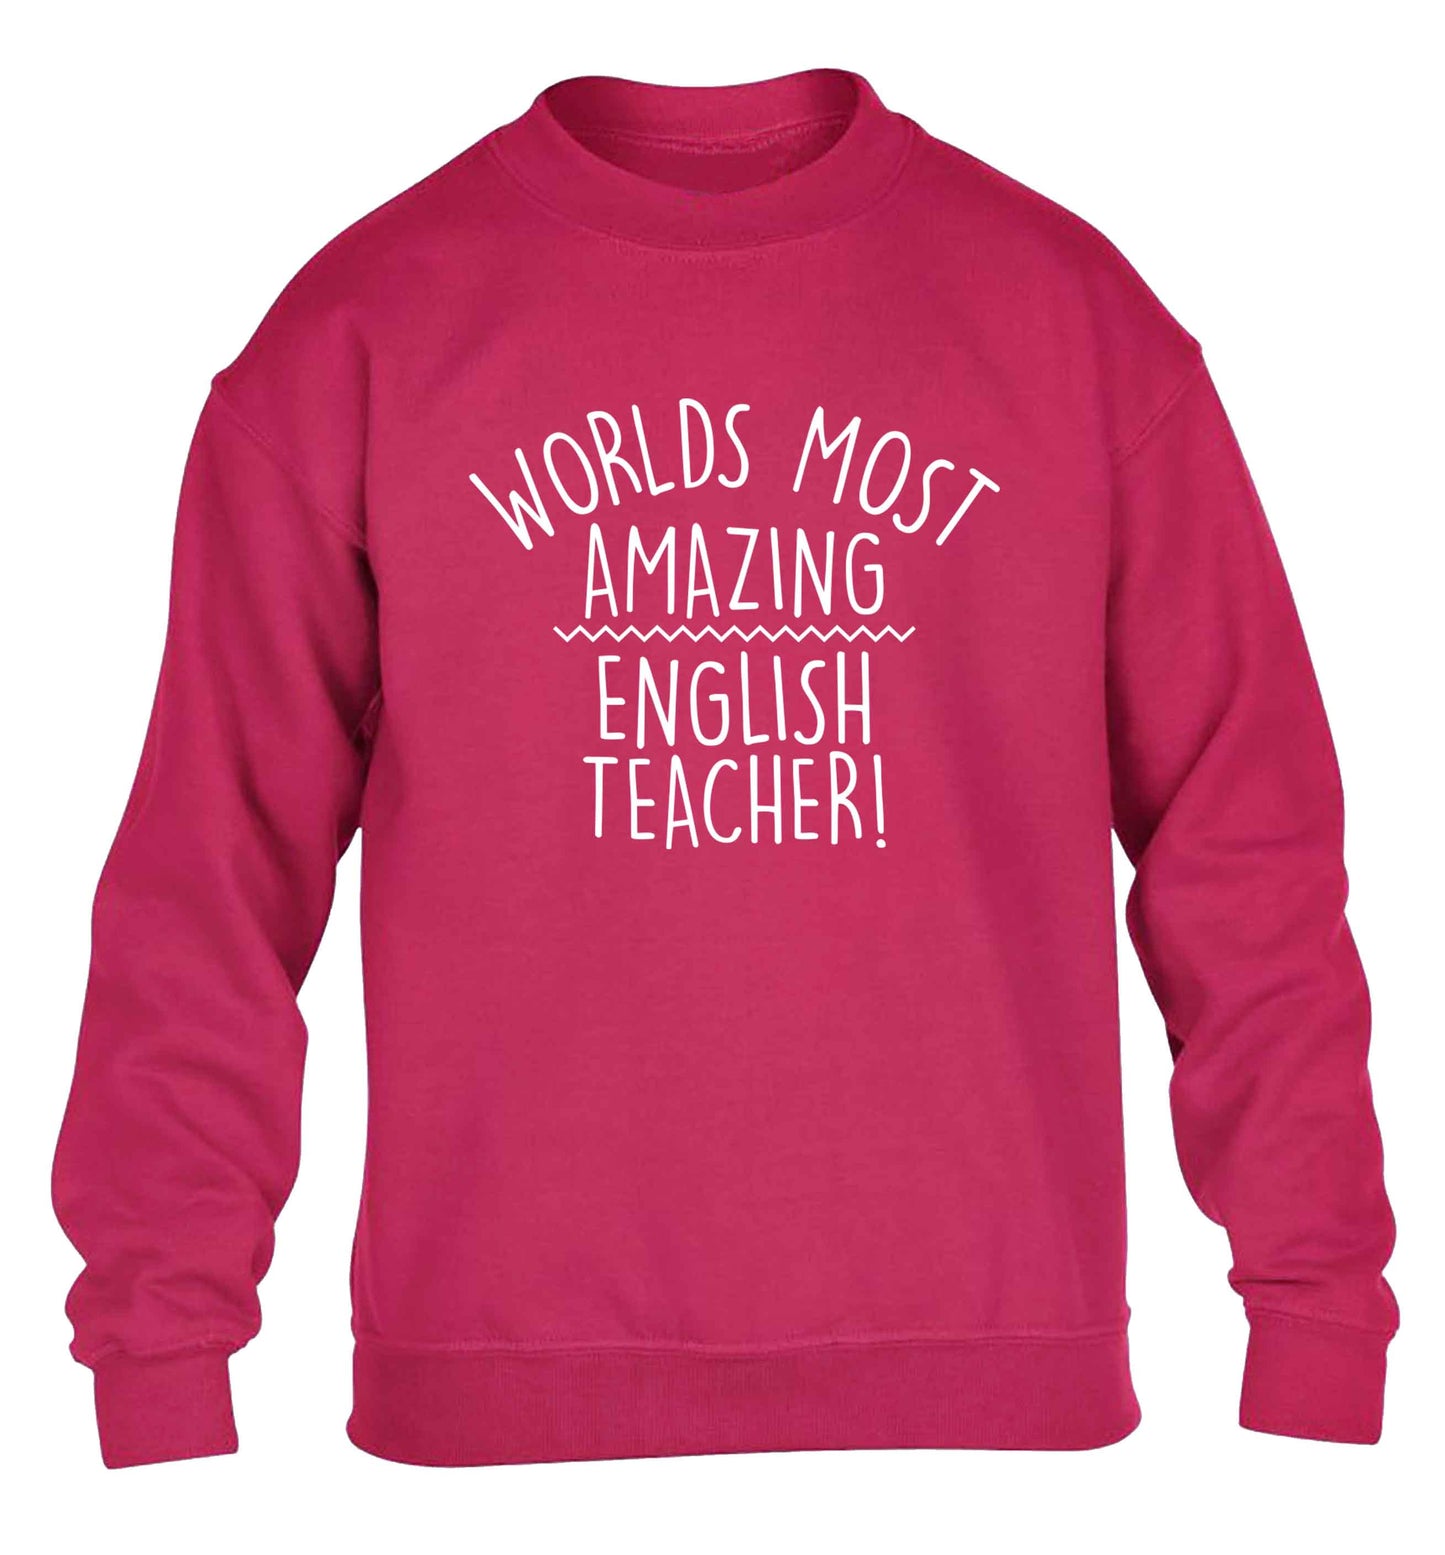 Worlds most amazing English teacher children's pink sweater 12-13 Years